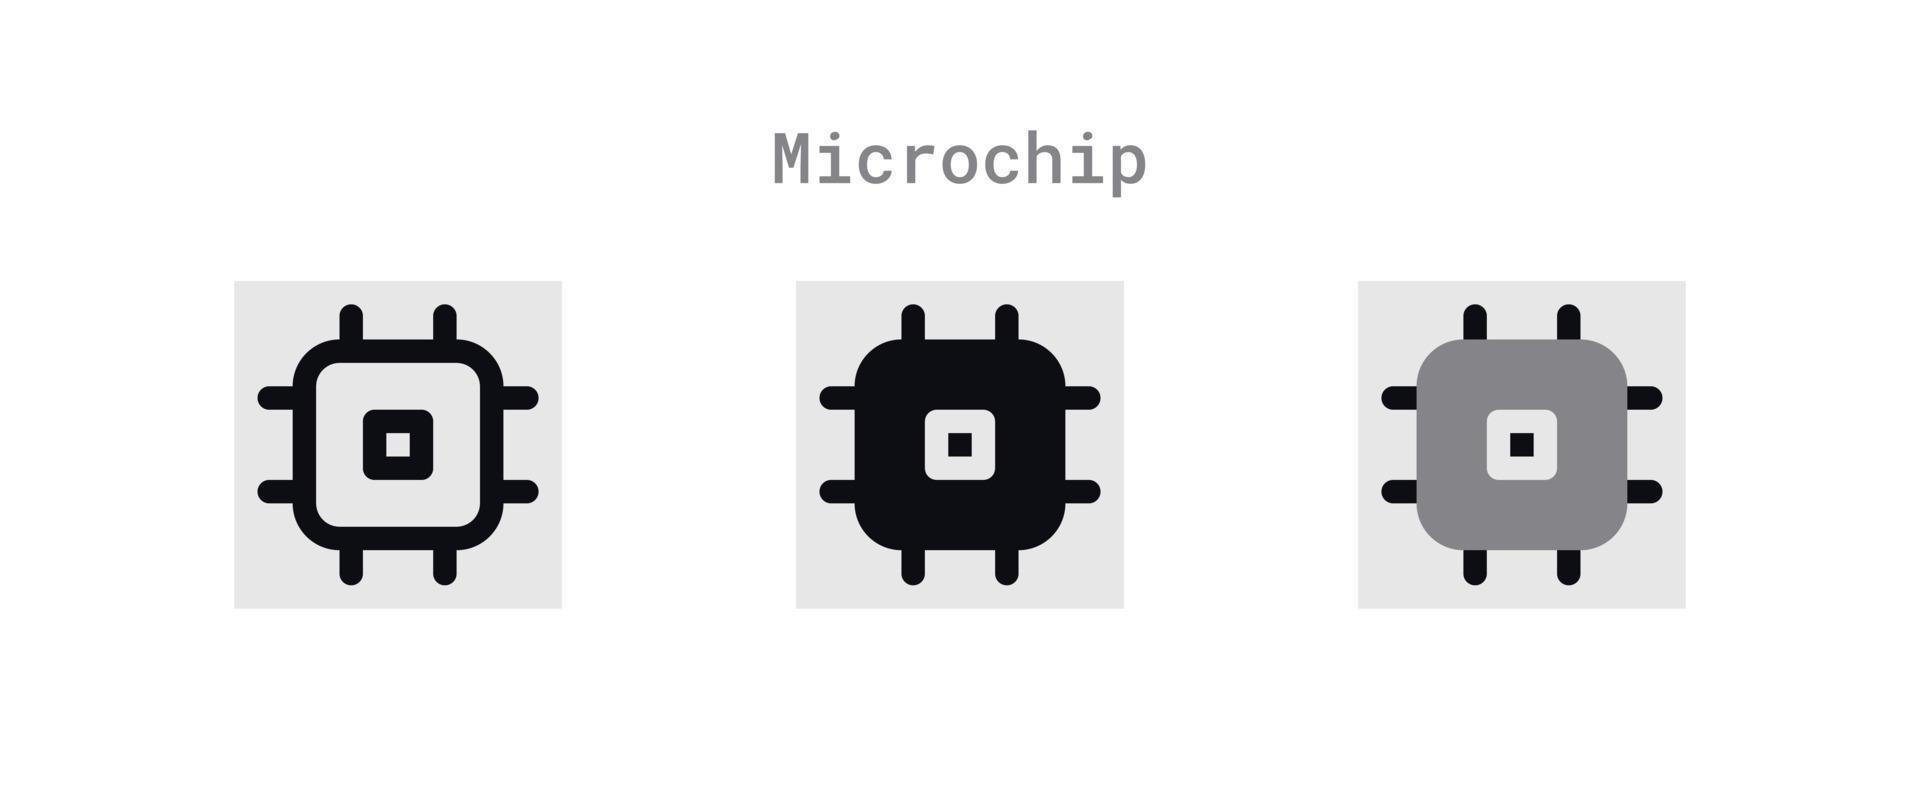 Microchip Icons Sheet vector